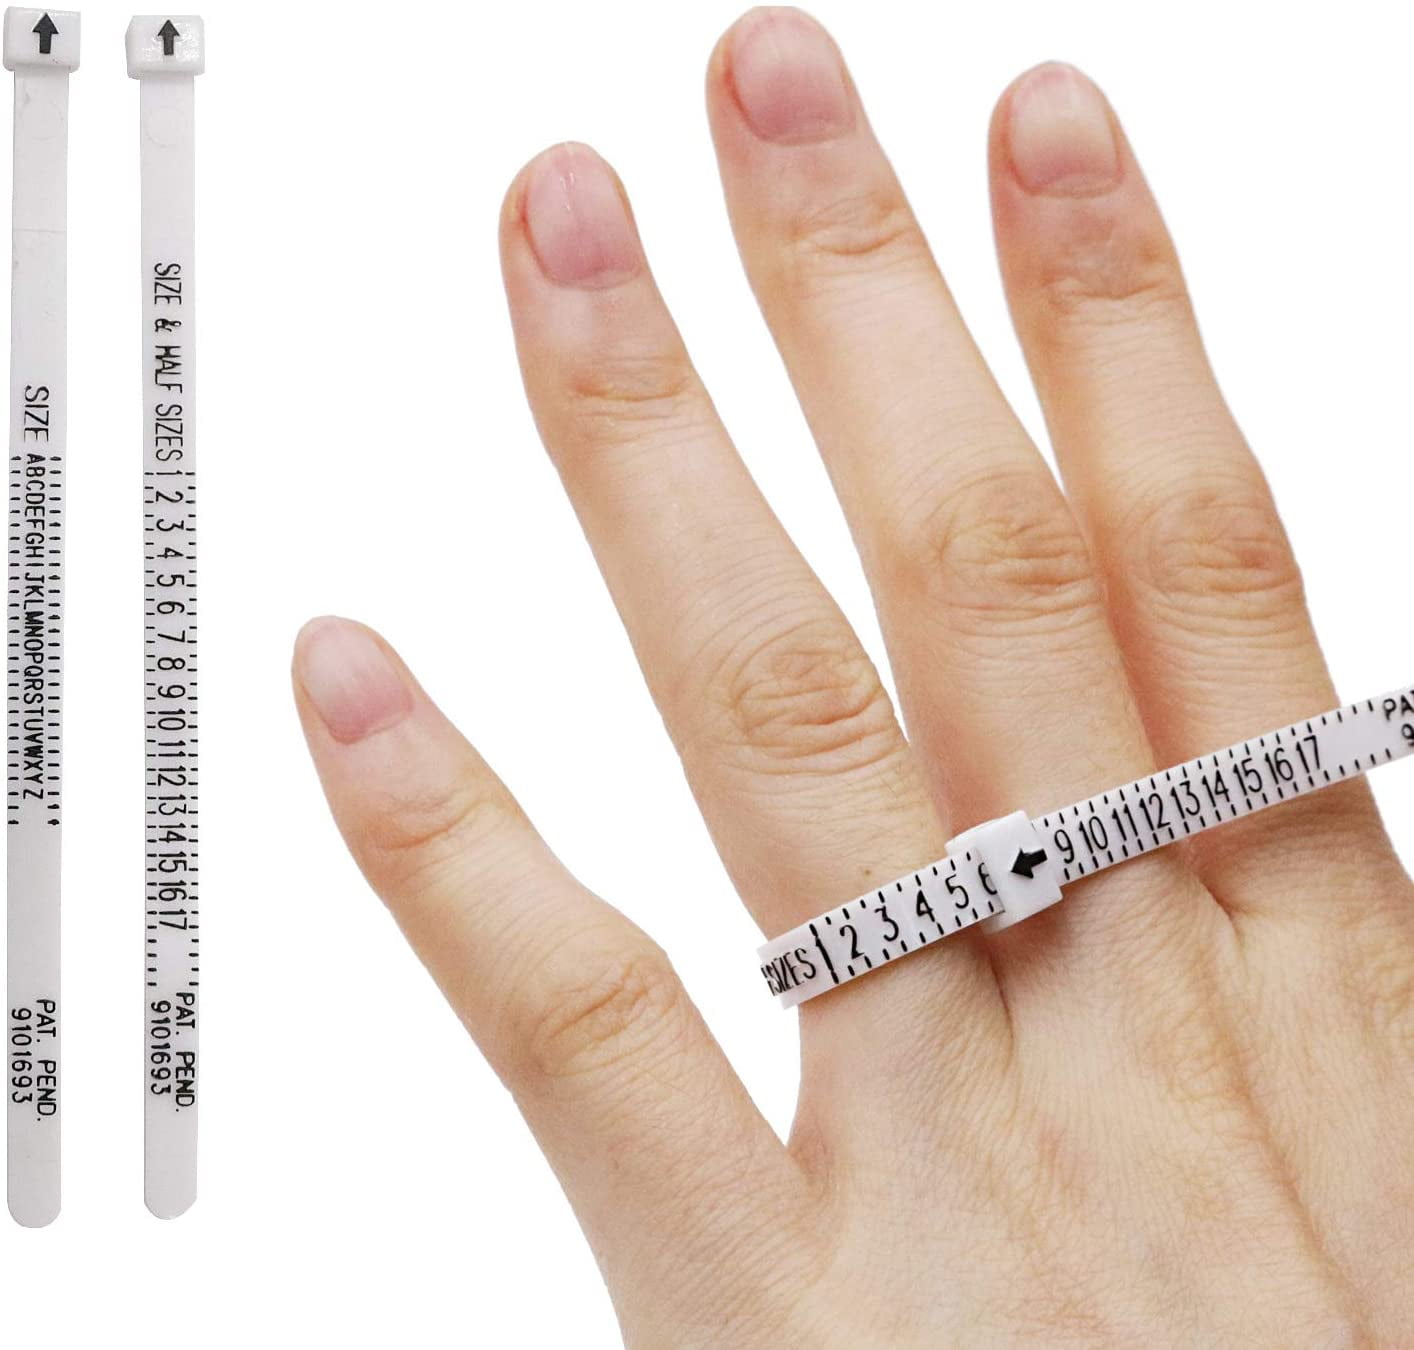 Glitz Design Ring Sizer Finger Measuring Tool Gauge @ Home for  Men-Women-Kids-Find Check Ring Size (1-17 US)